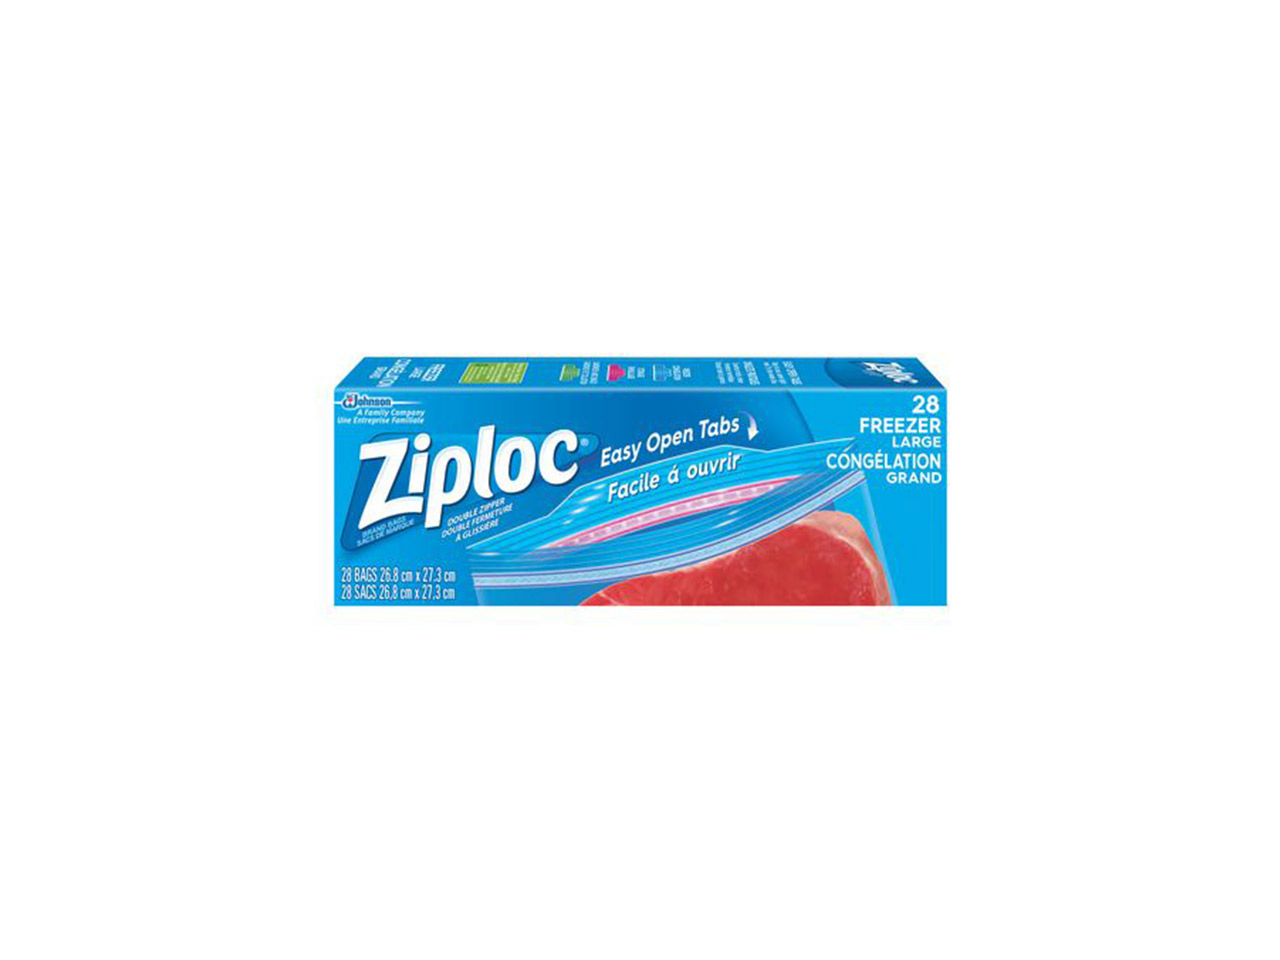 A blue box of Ziploc freezer bags